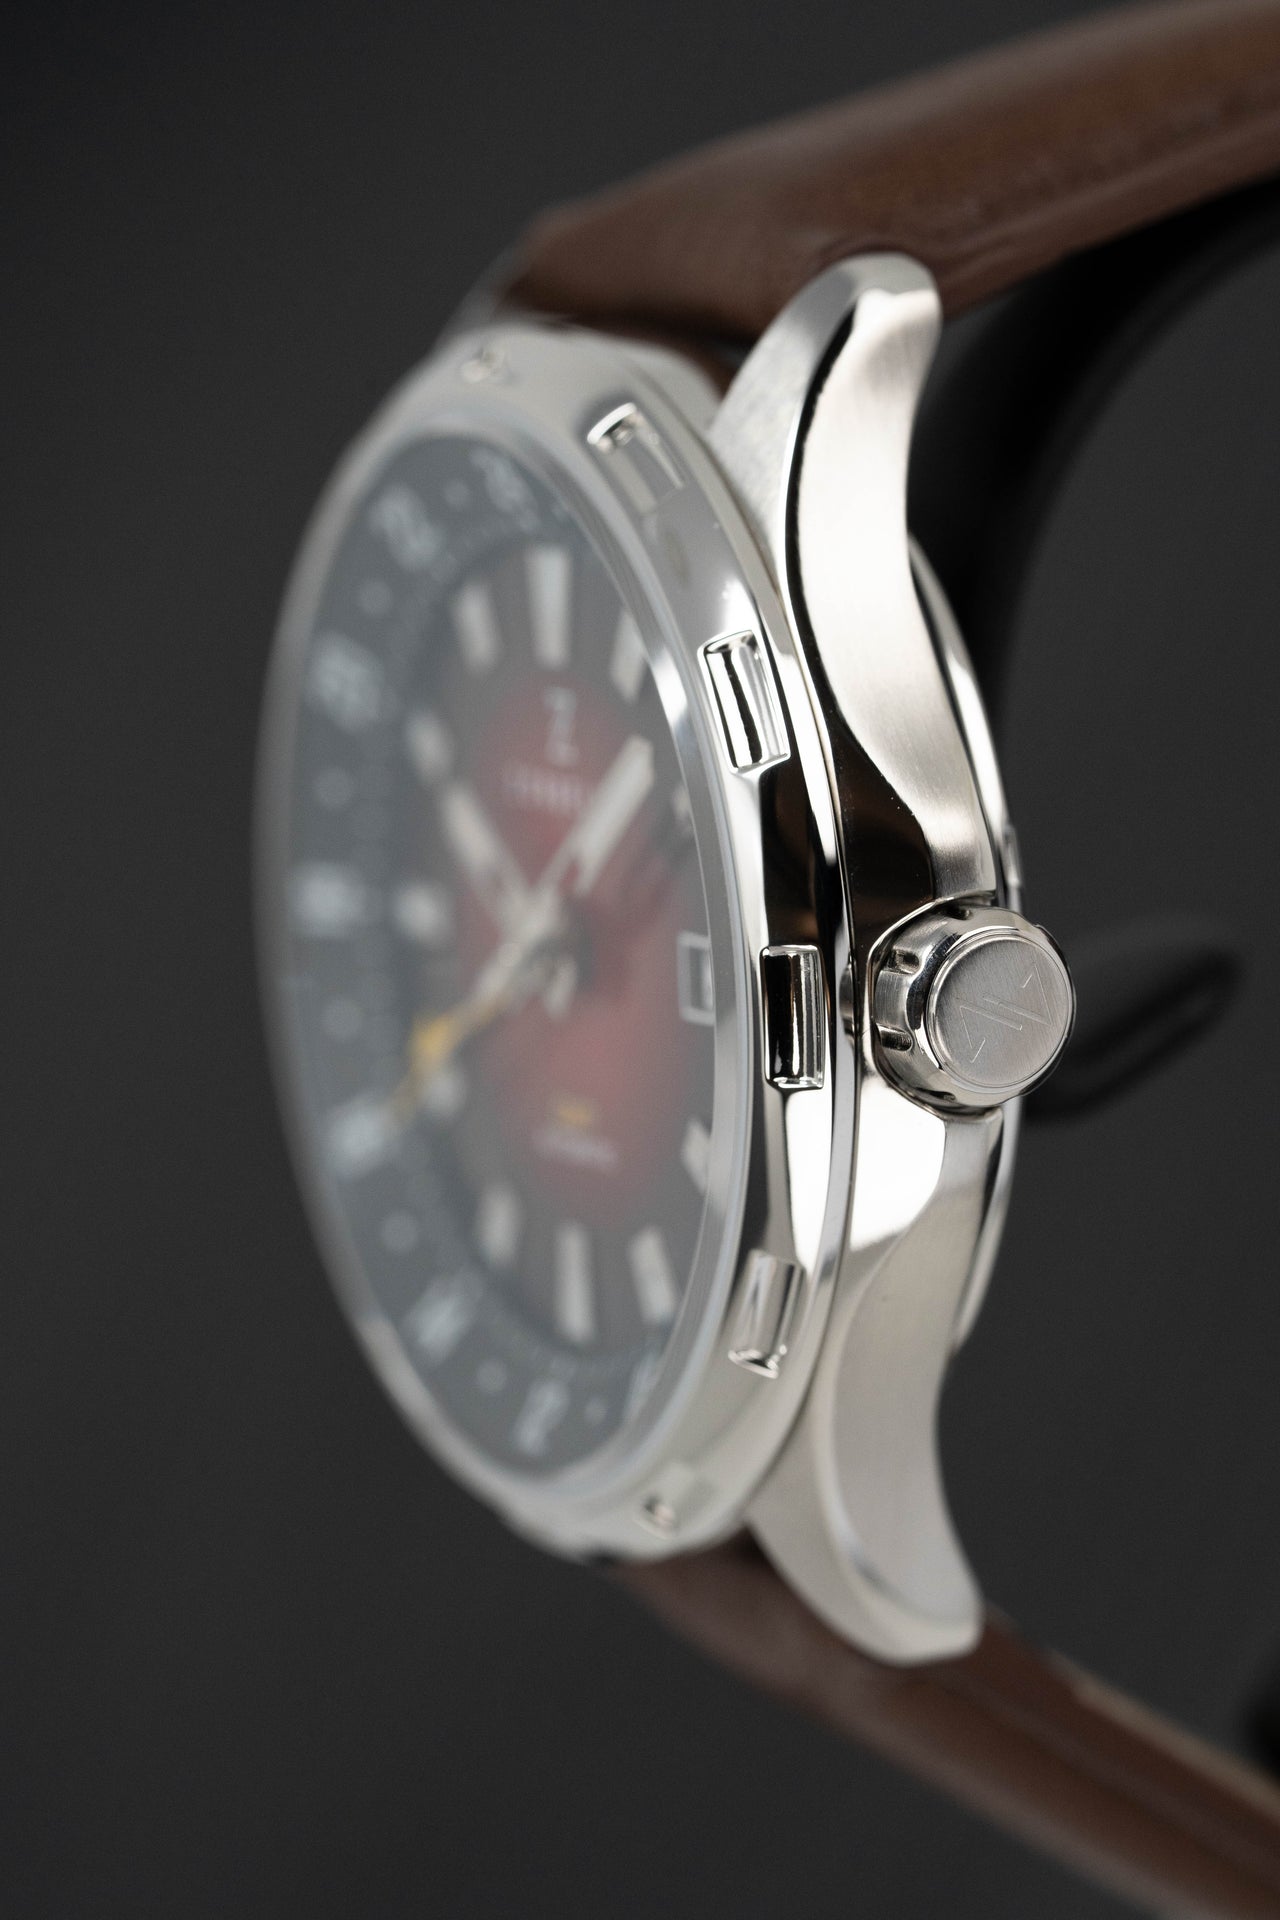 Zorbello Mechanical Watch G1 GMT Red LumiNova® ZBAF003